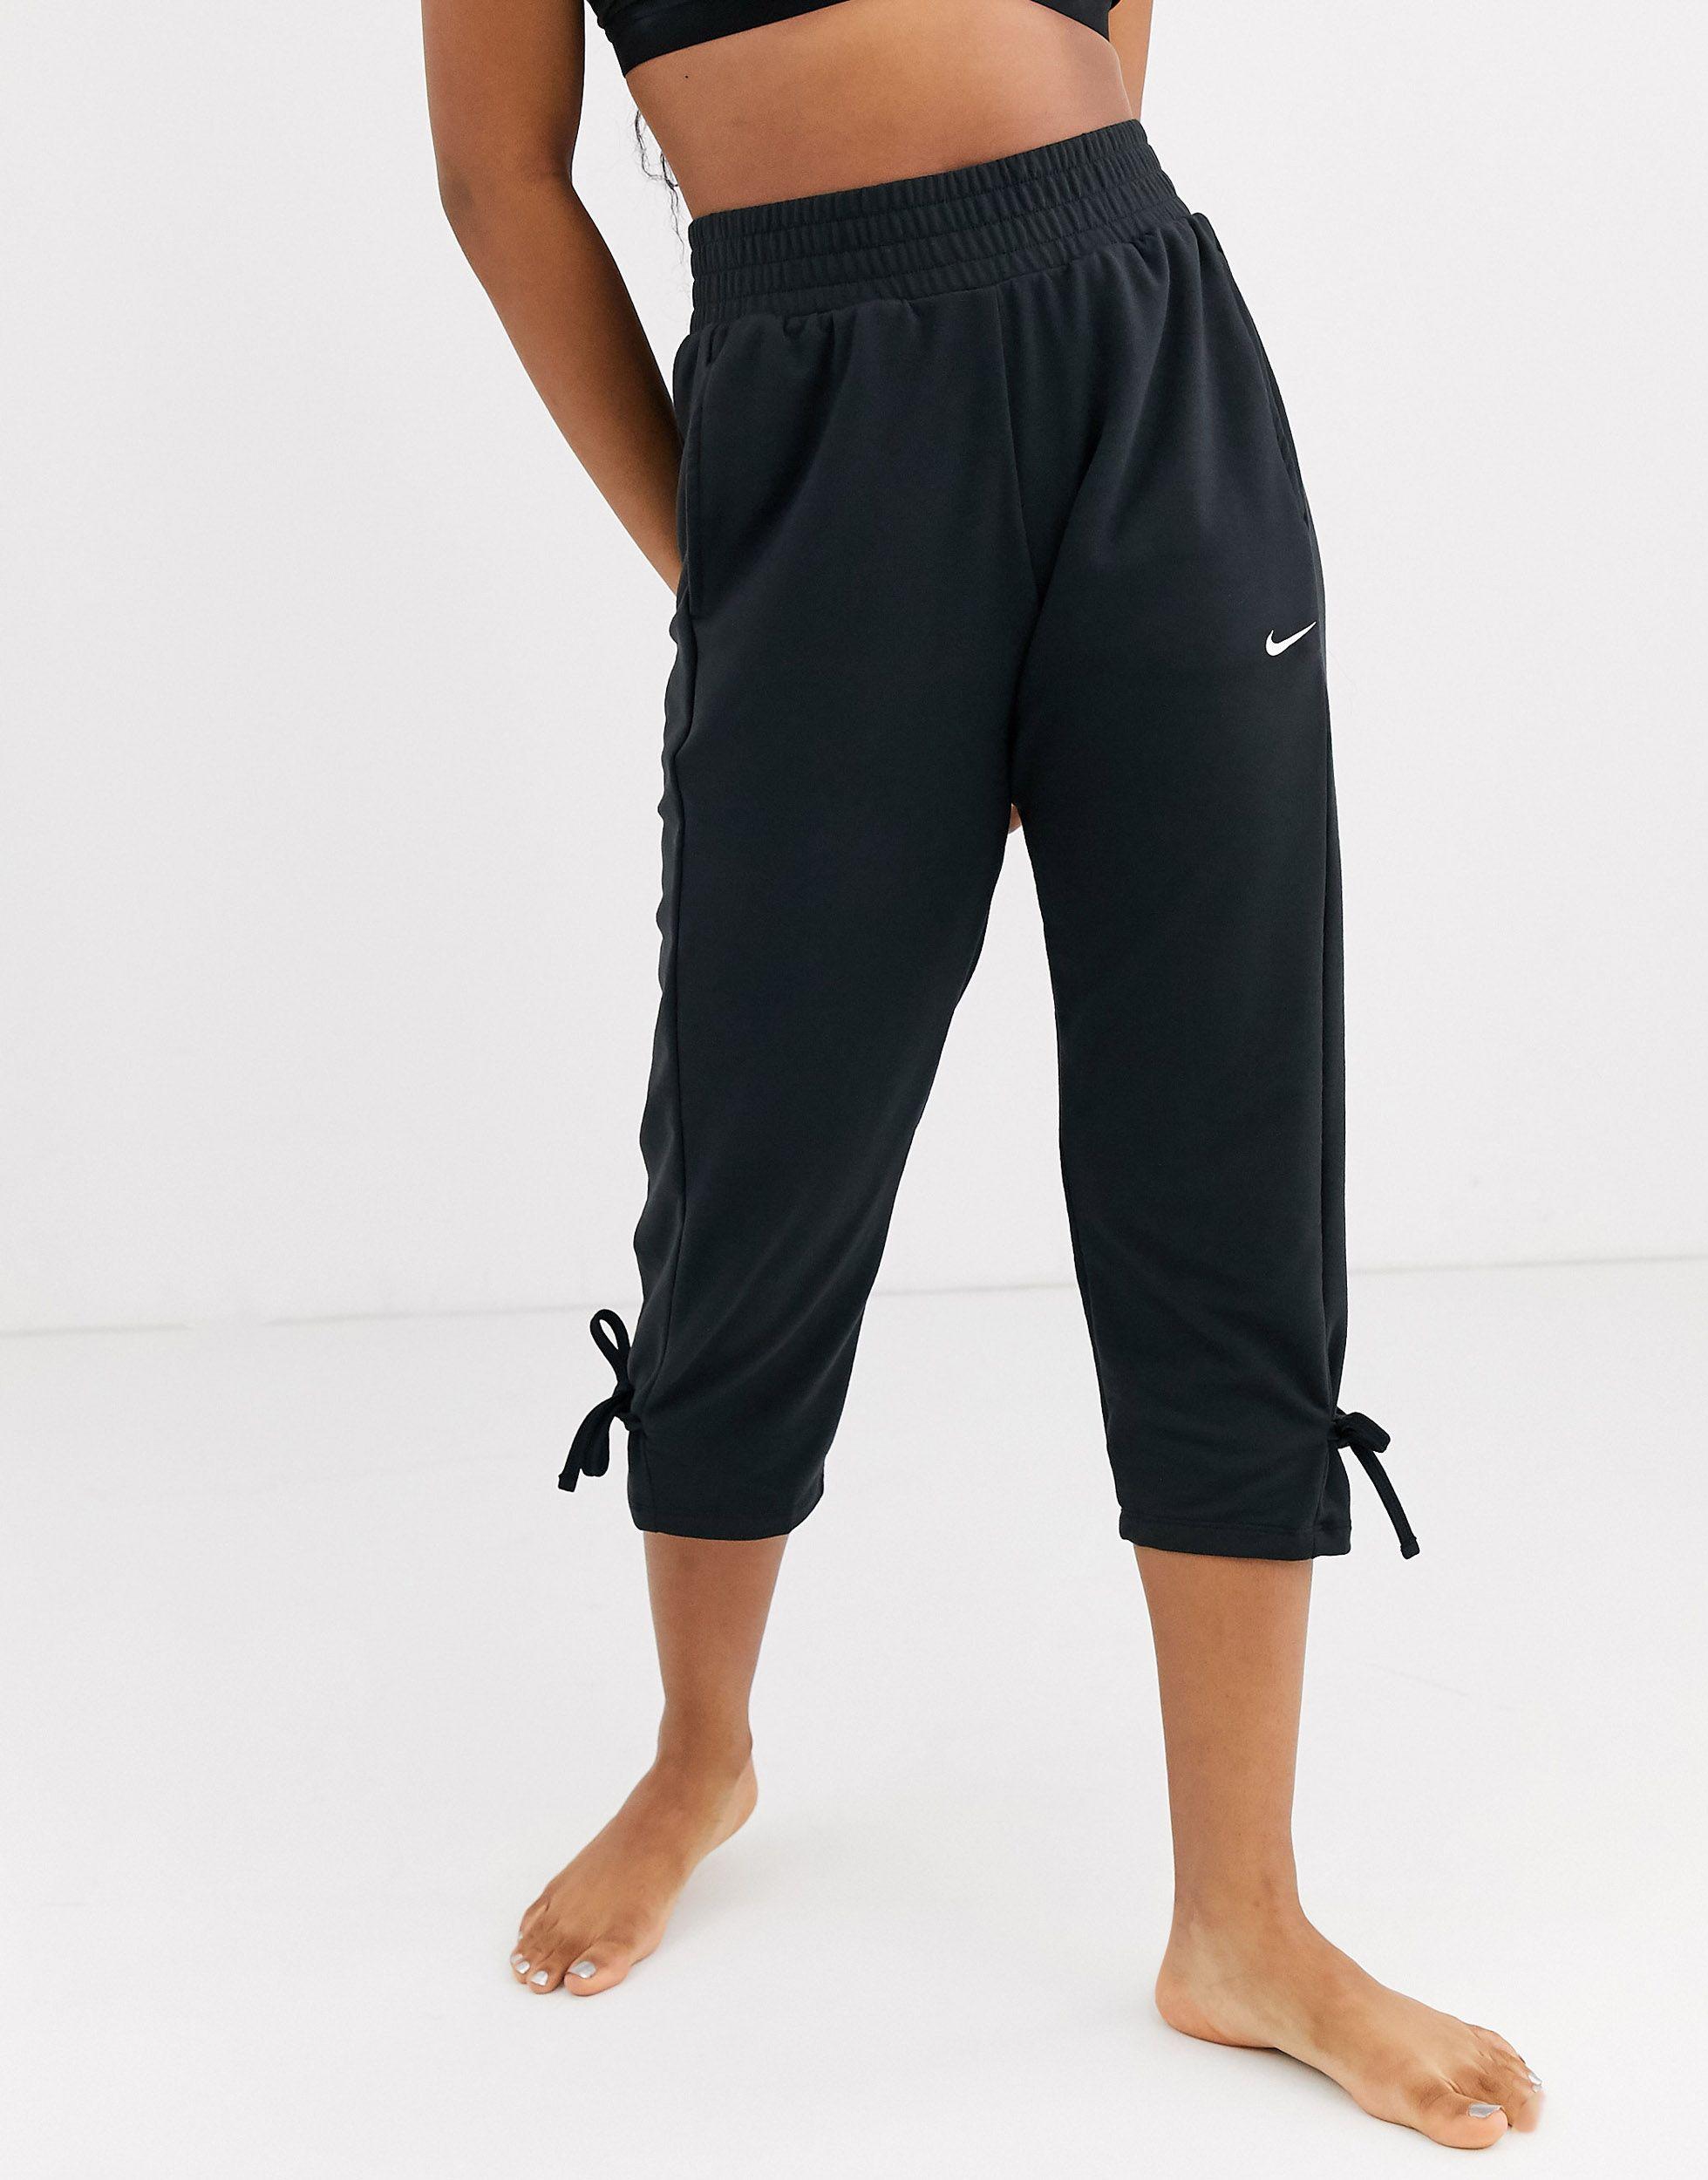 https://cdna.lystit.com/photos/asos/b75ff9fa/nike-Black-Nike-Yoga-Loose-Fit-Pants-With-Tie-Detail.jpeg